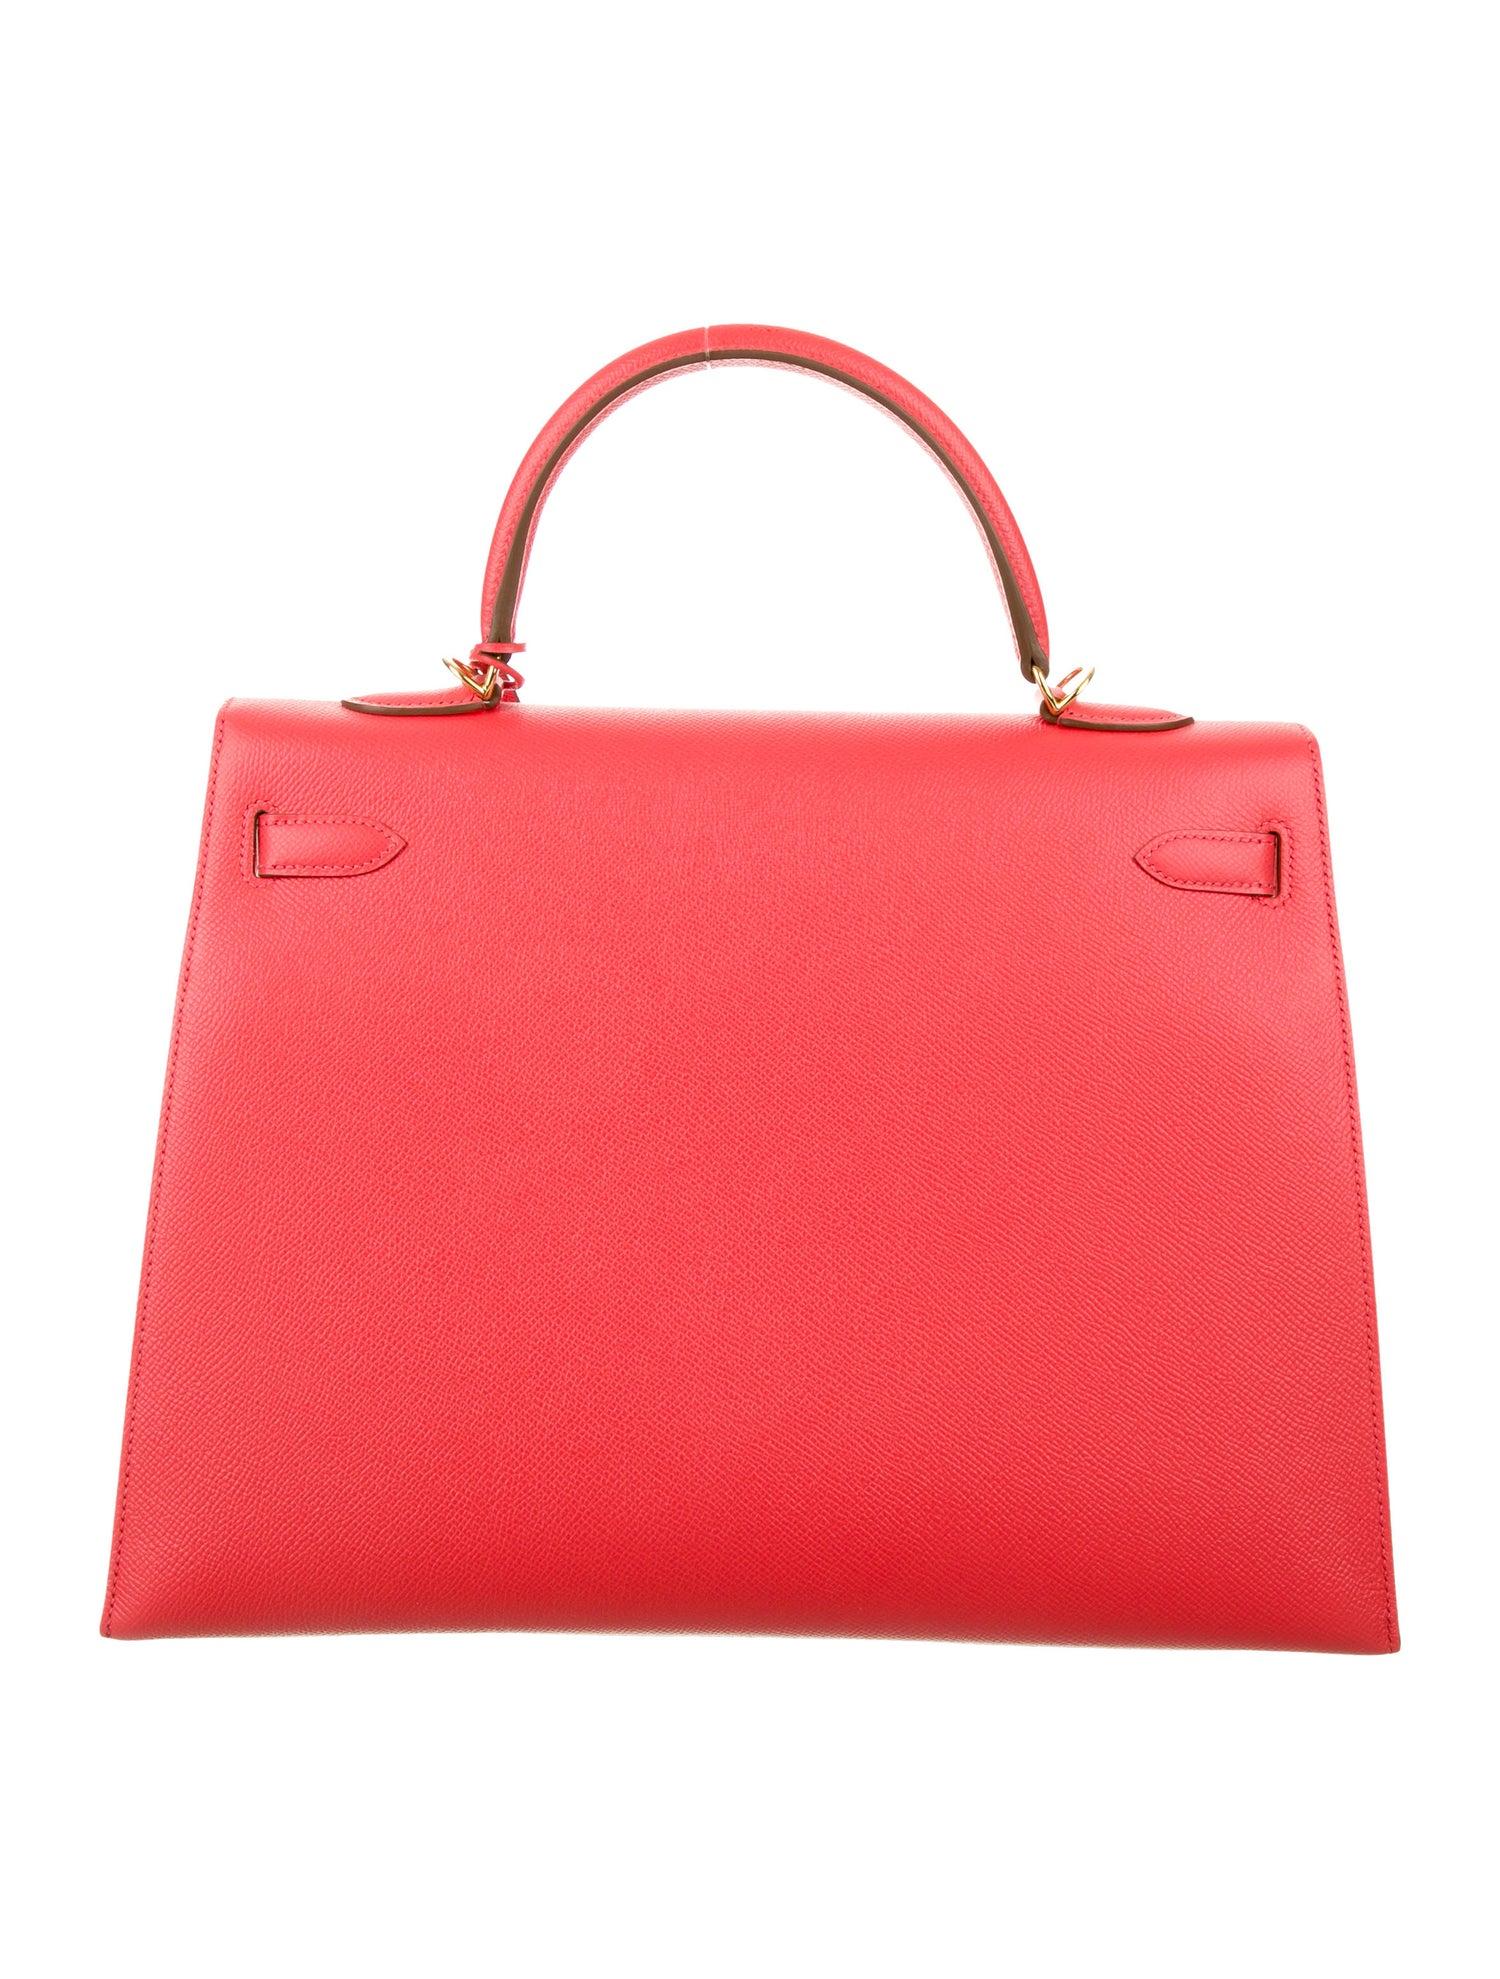 Red Hermes NEW Special Hermes Kelly 35 Rose Leather Top Handle Satchel Tote Bag